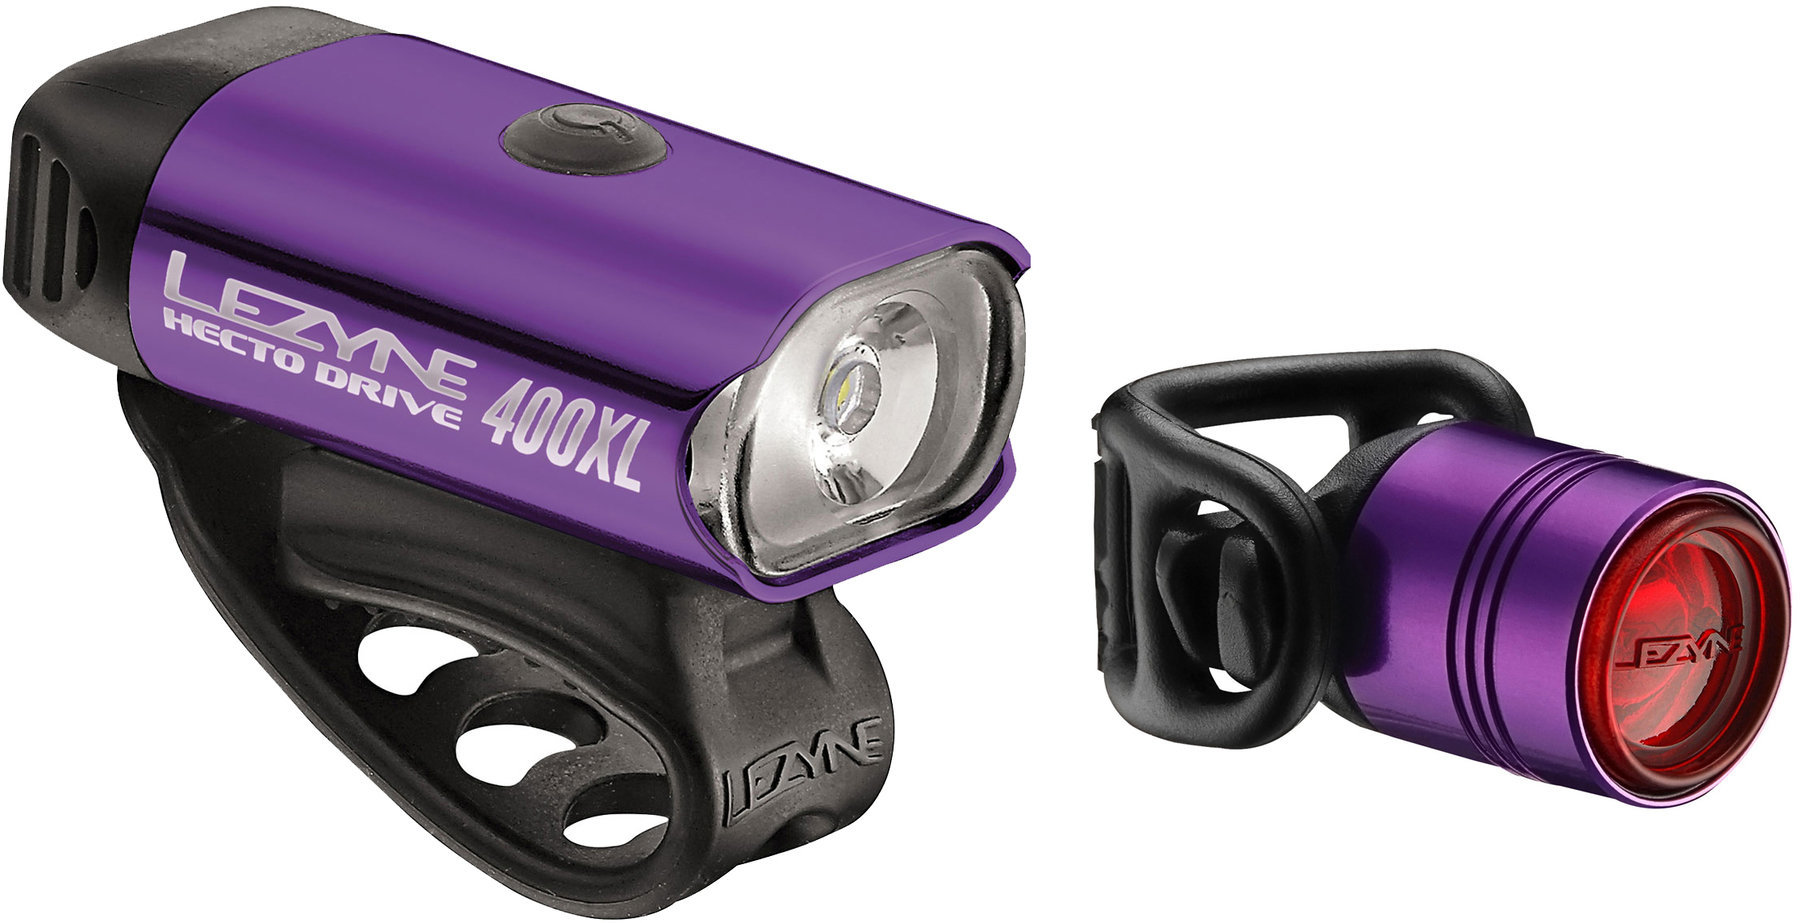 Cycling light Lezyne Hecto Drive 400Xl / Femto Pair Purple